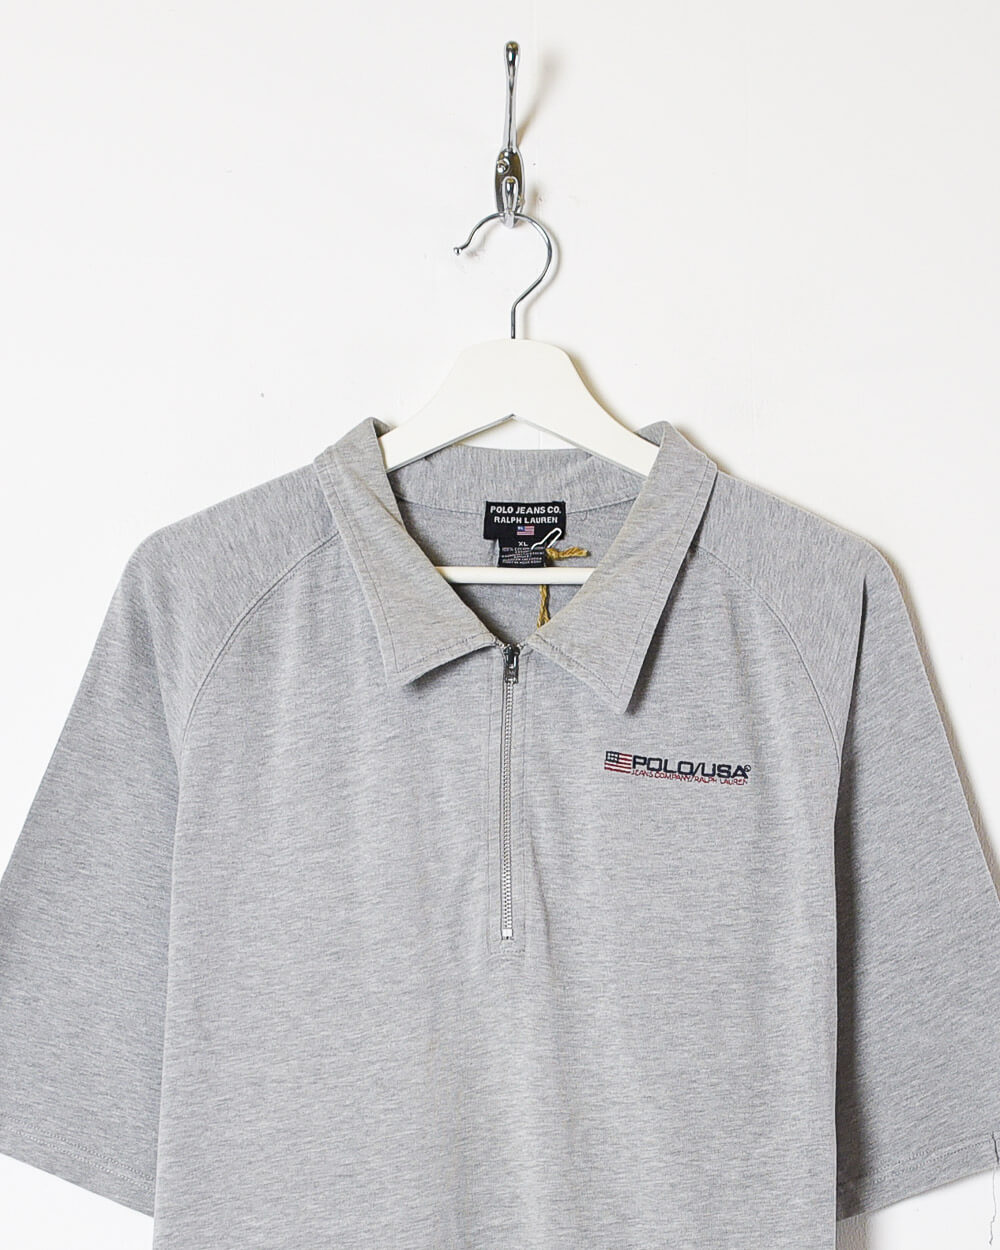 Stone Ralph Lauren 1/4 Zip Polo Shirt - XX-Large